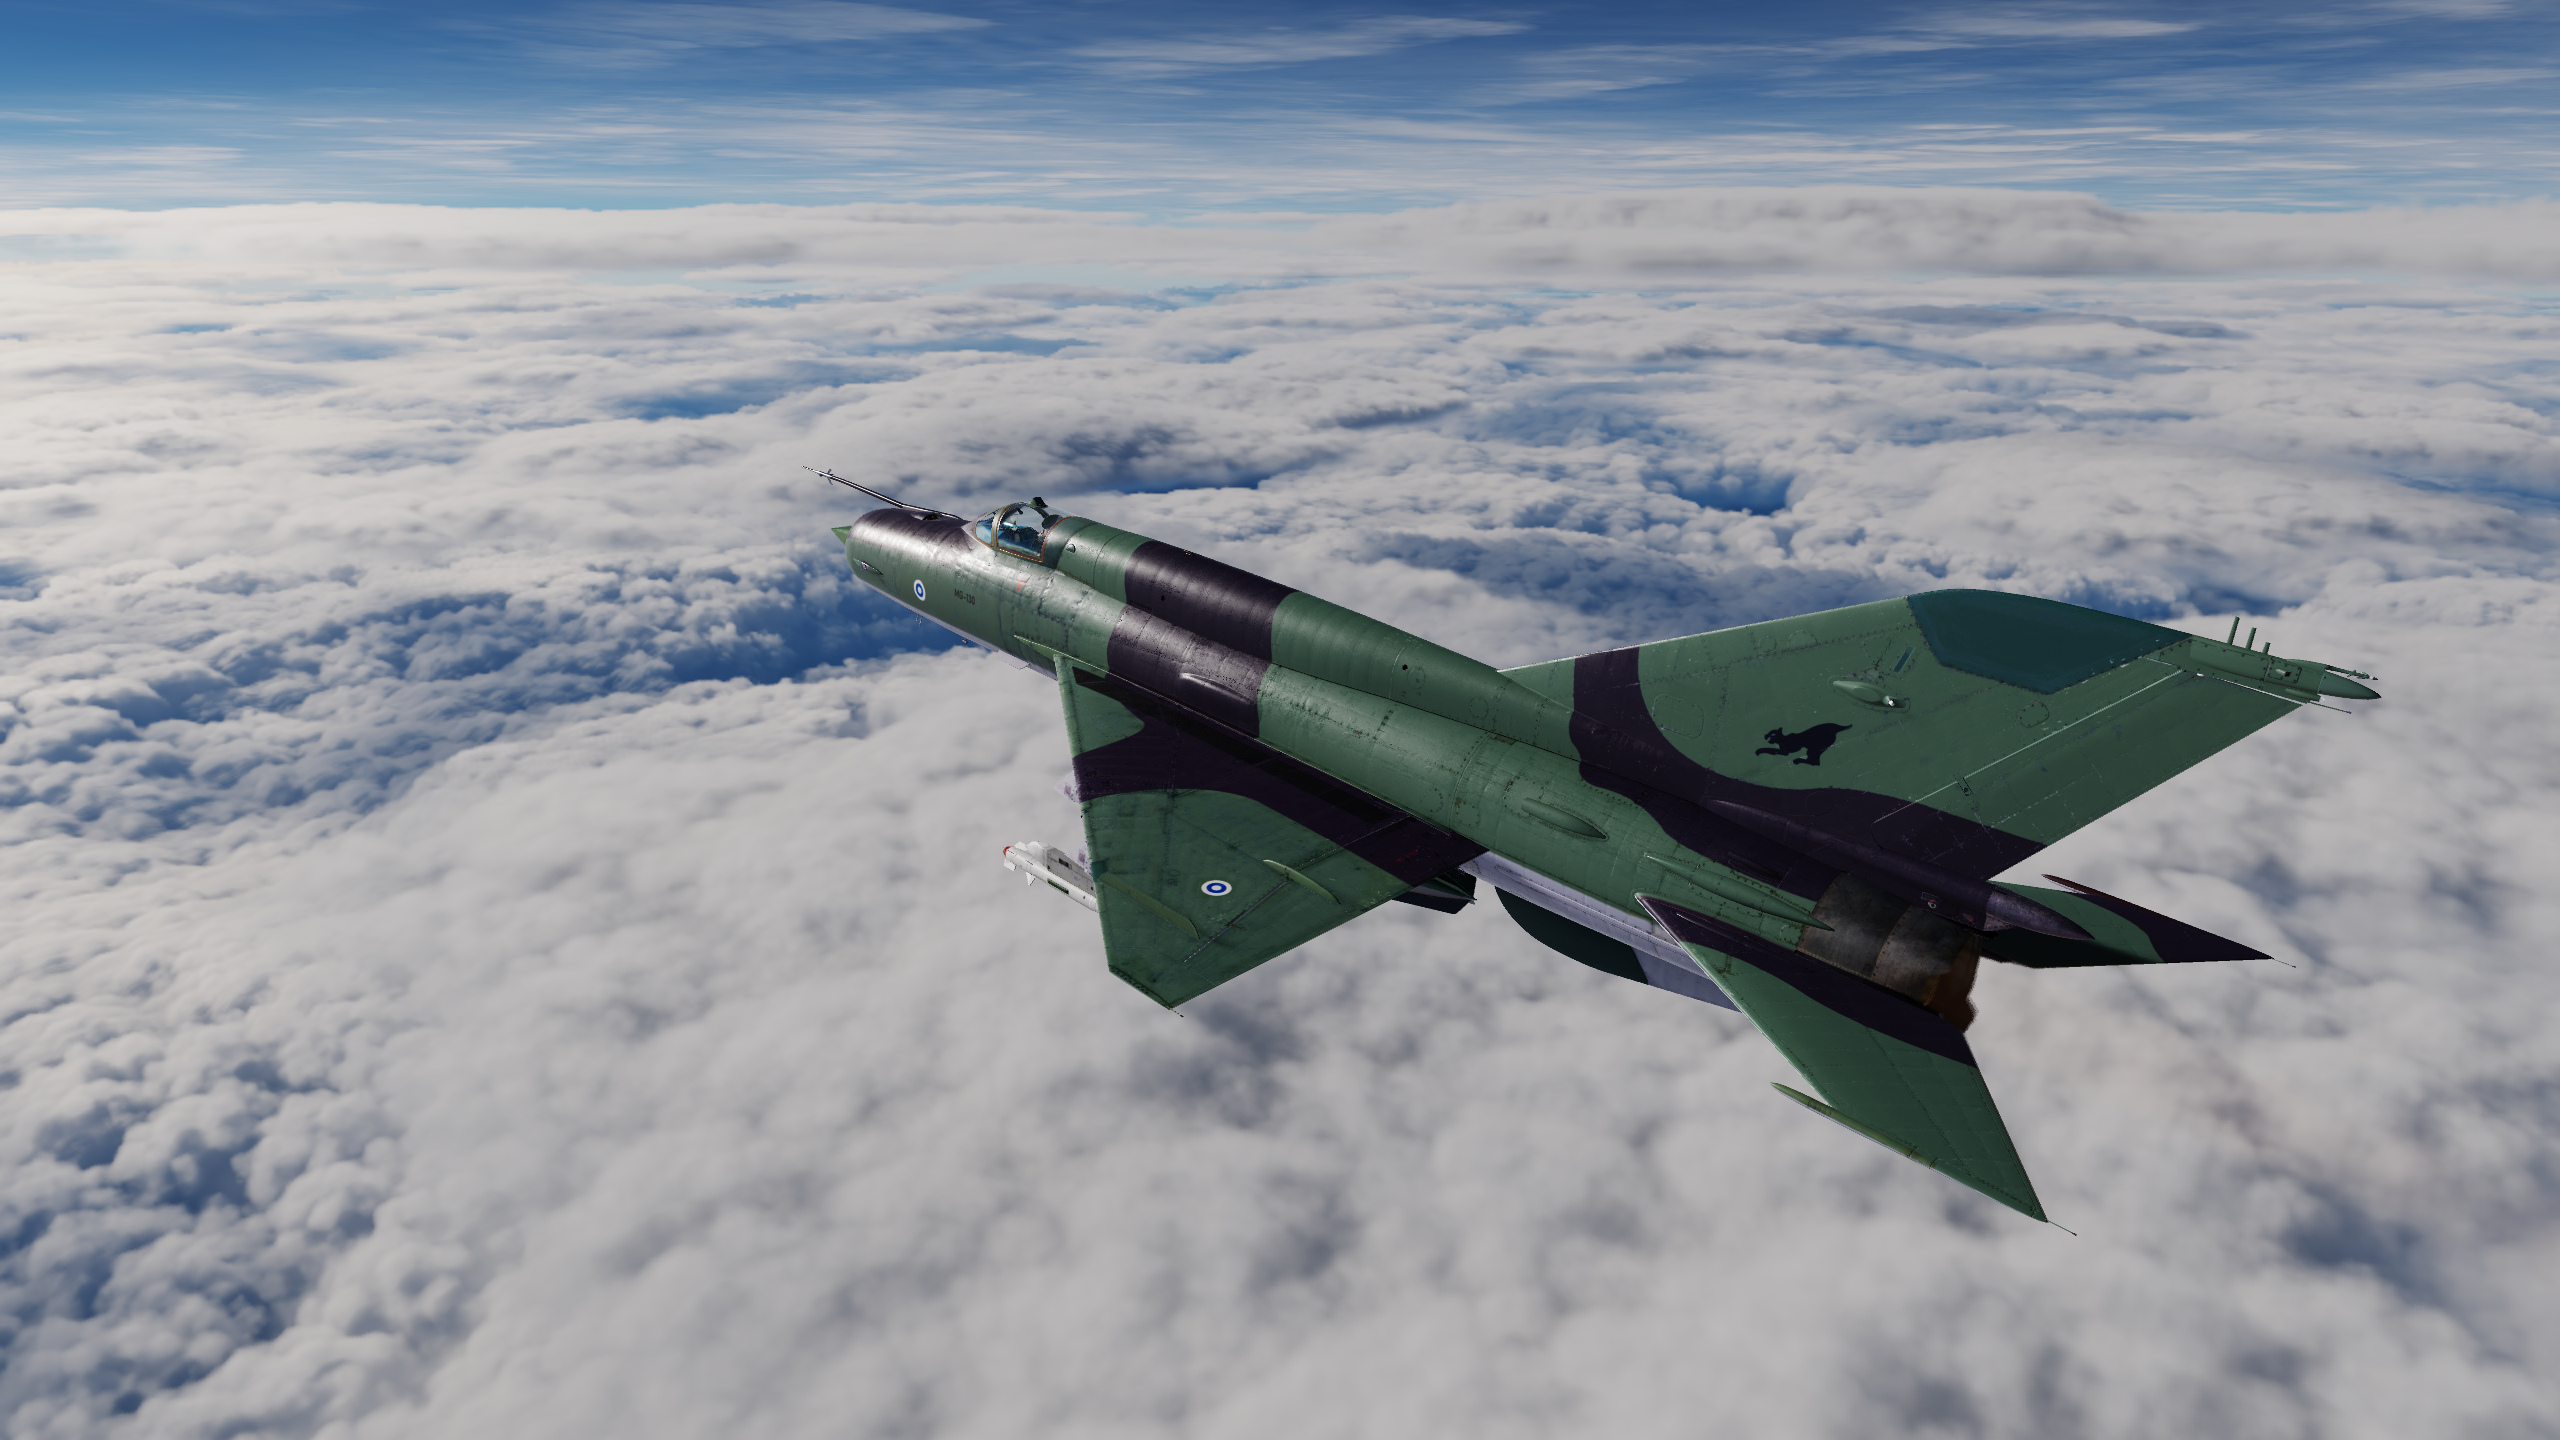 Finnish Air Force MiG-21BIS